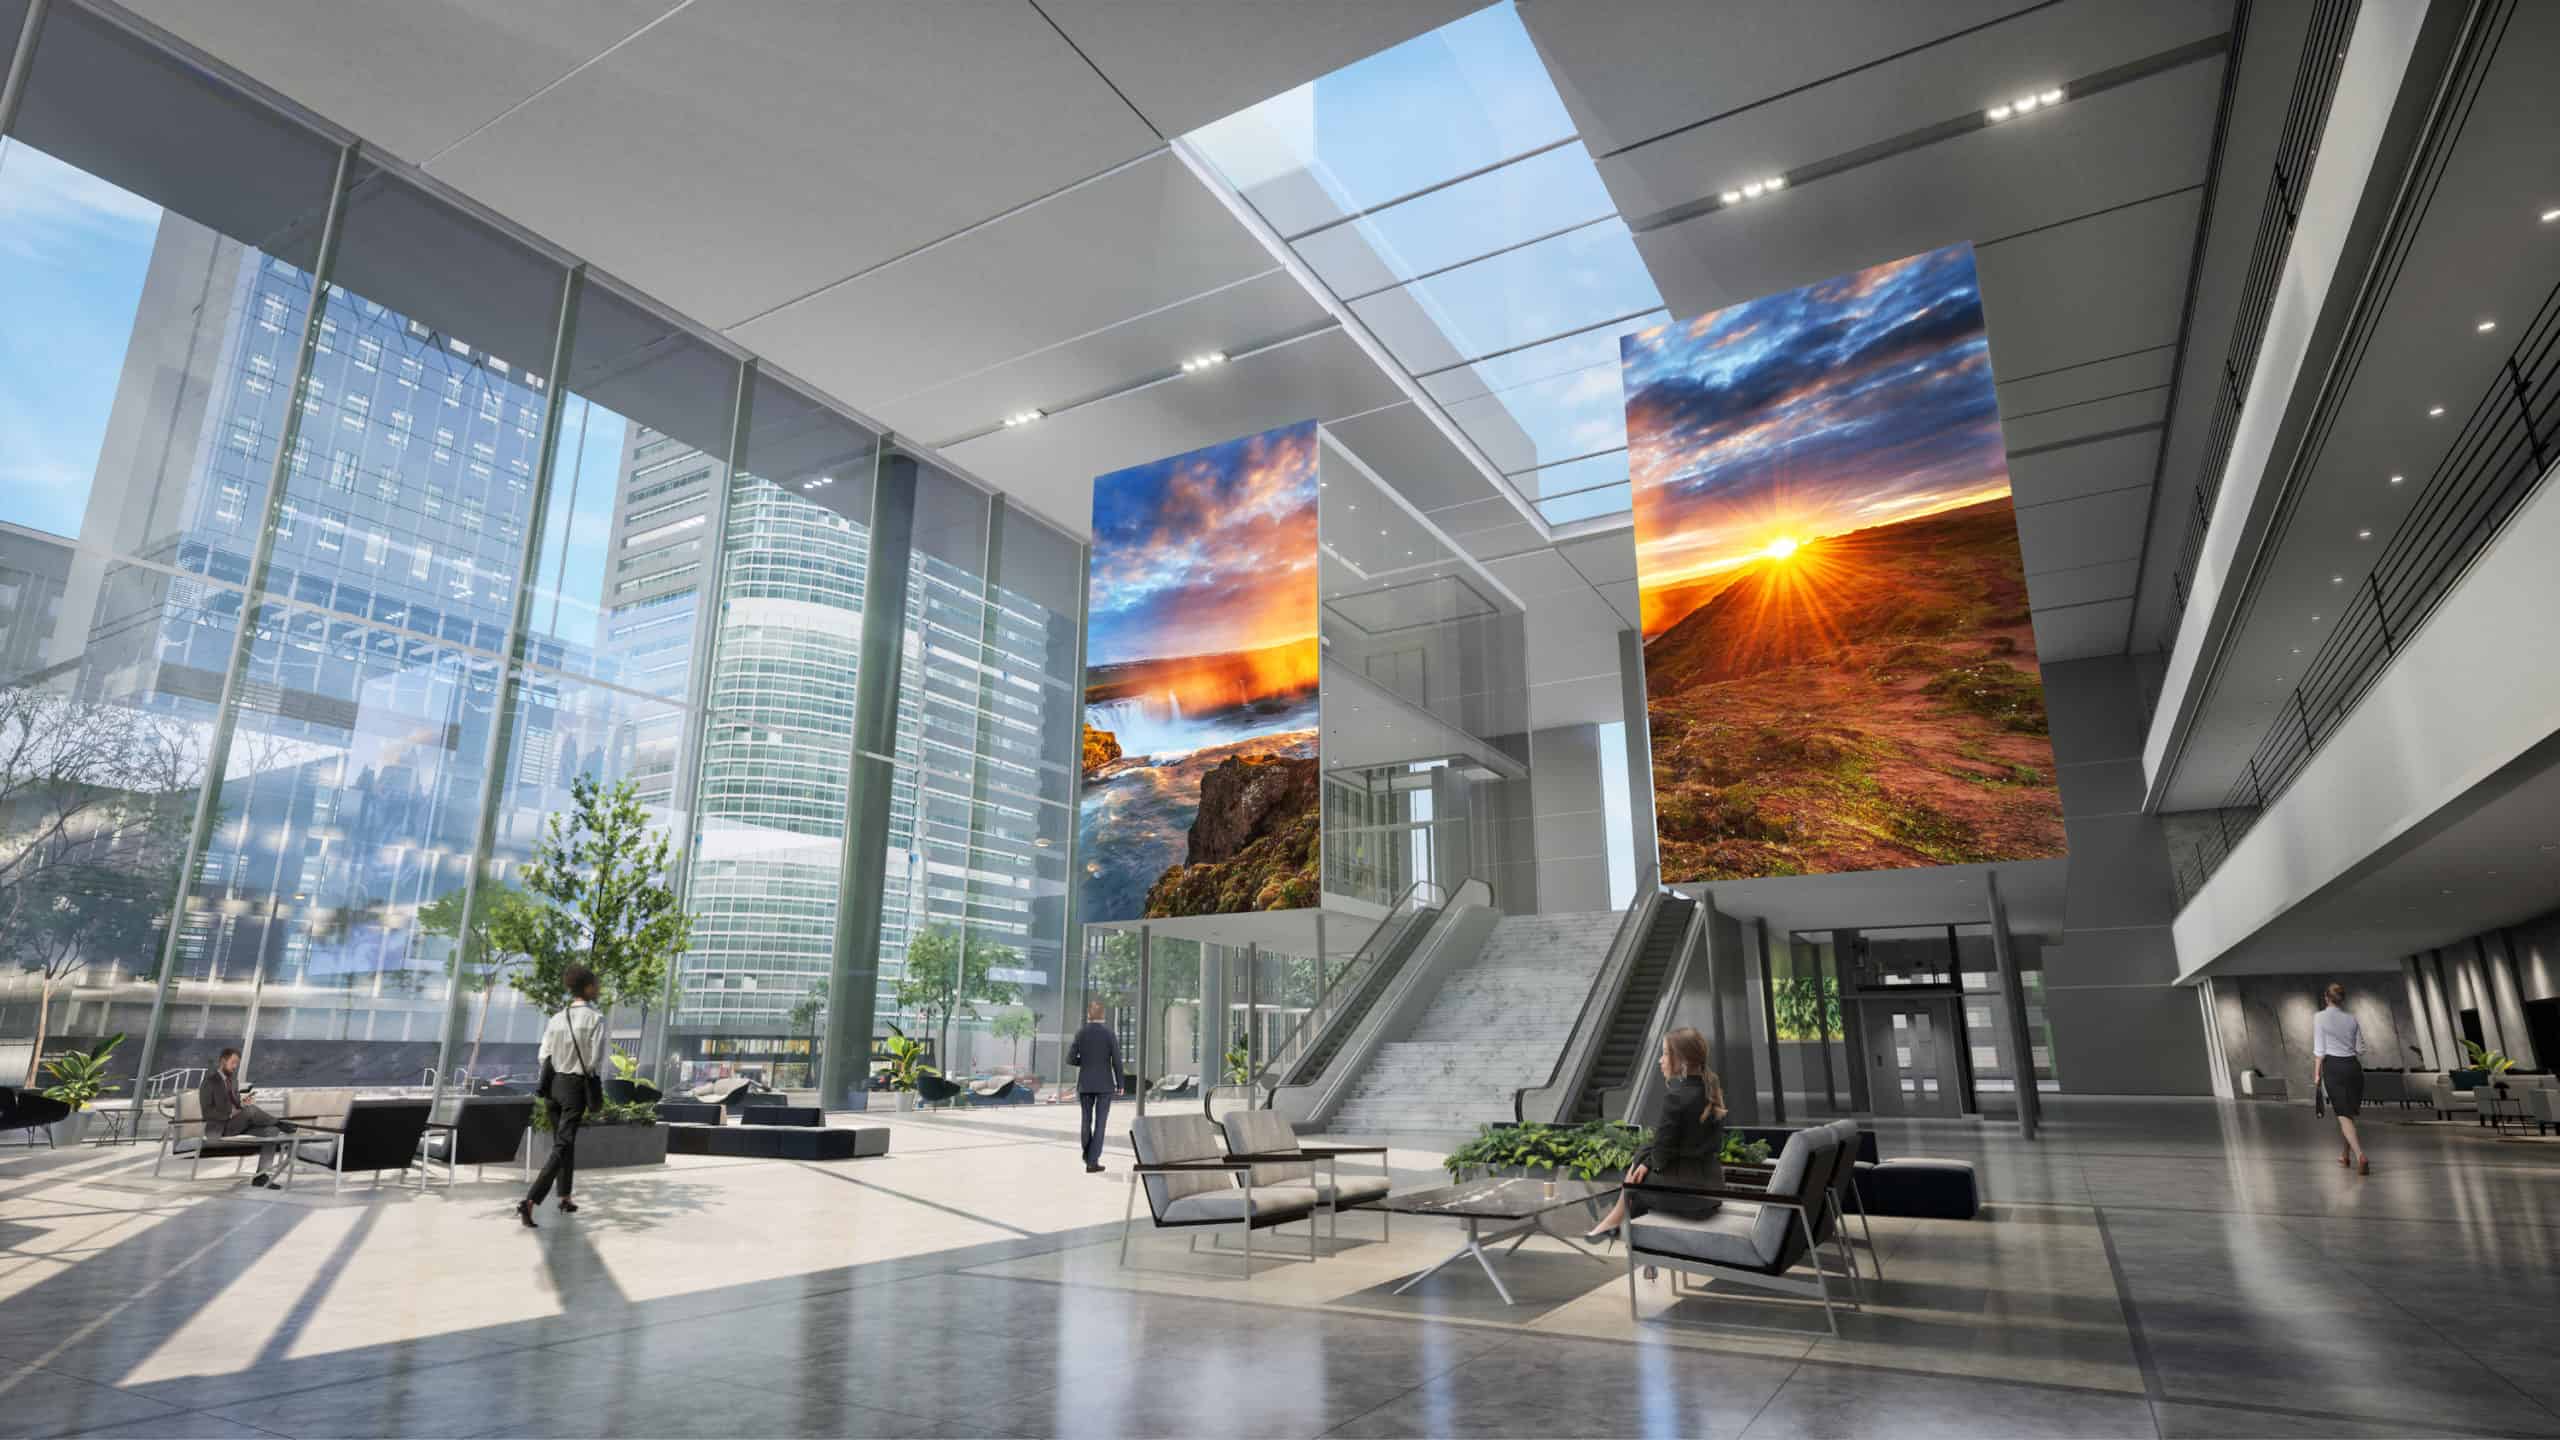 Large Sony digital displays as lobby centerpiece